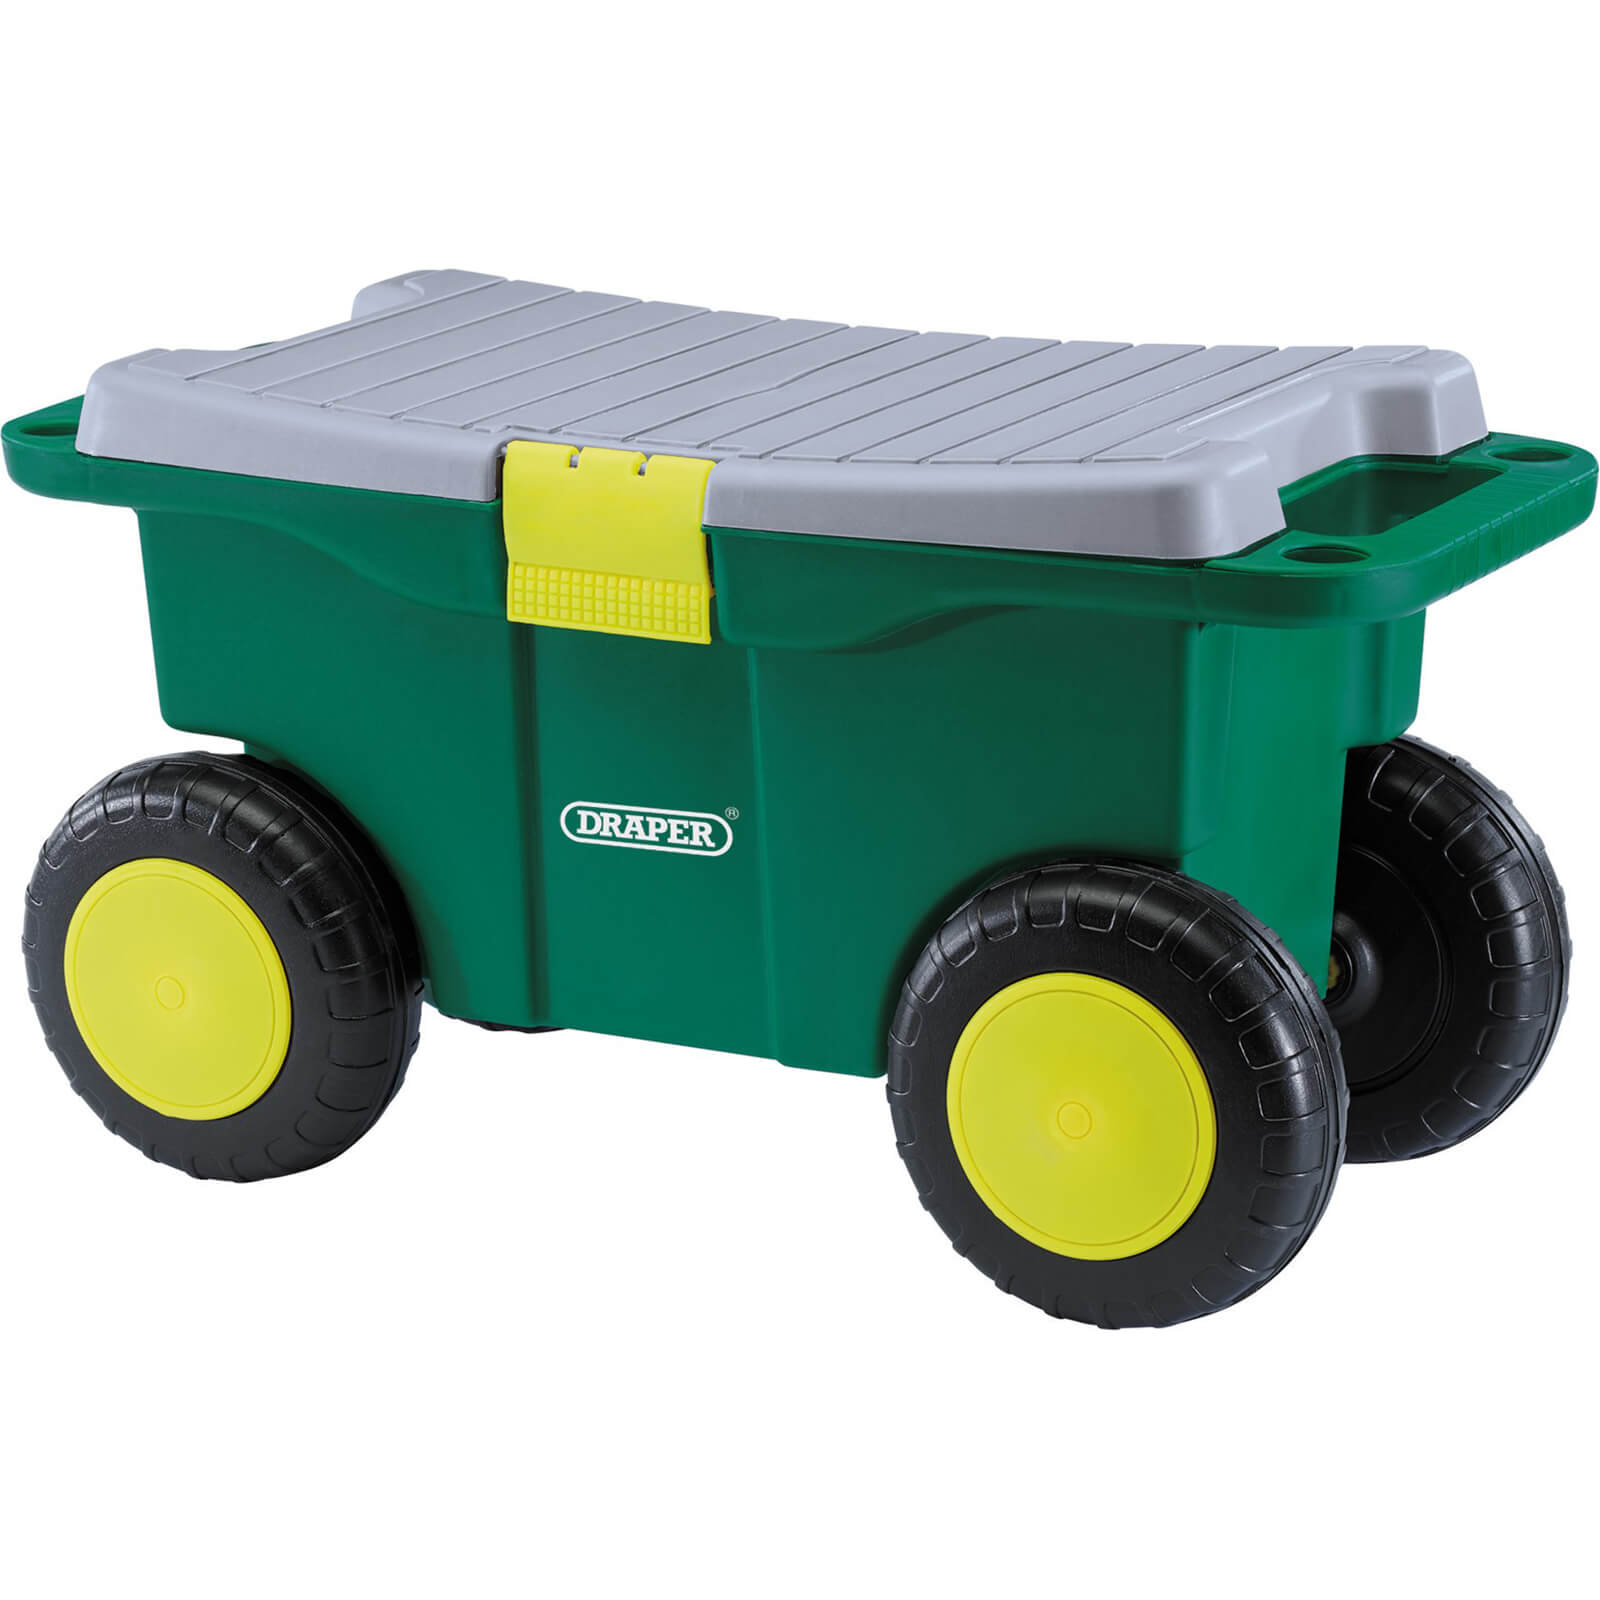 Image of Draper Gardeners Mobile Tool Box and Seat